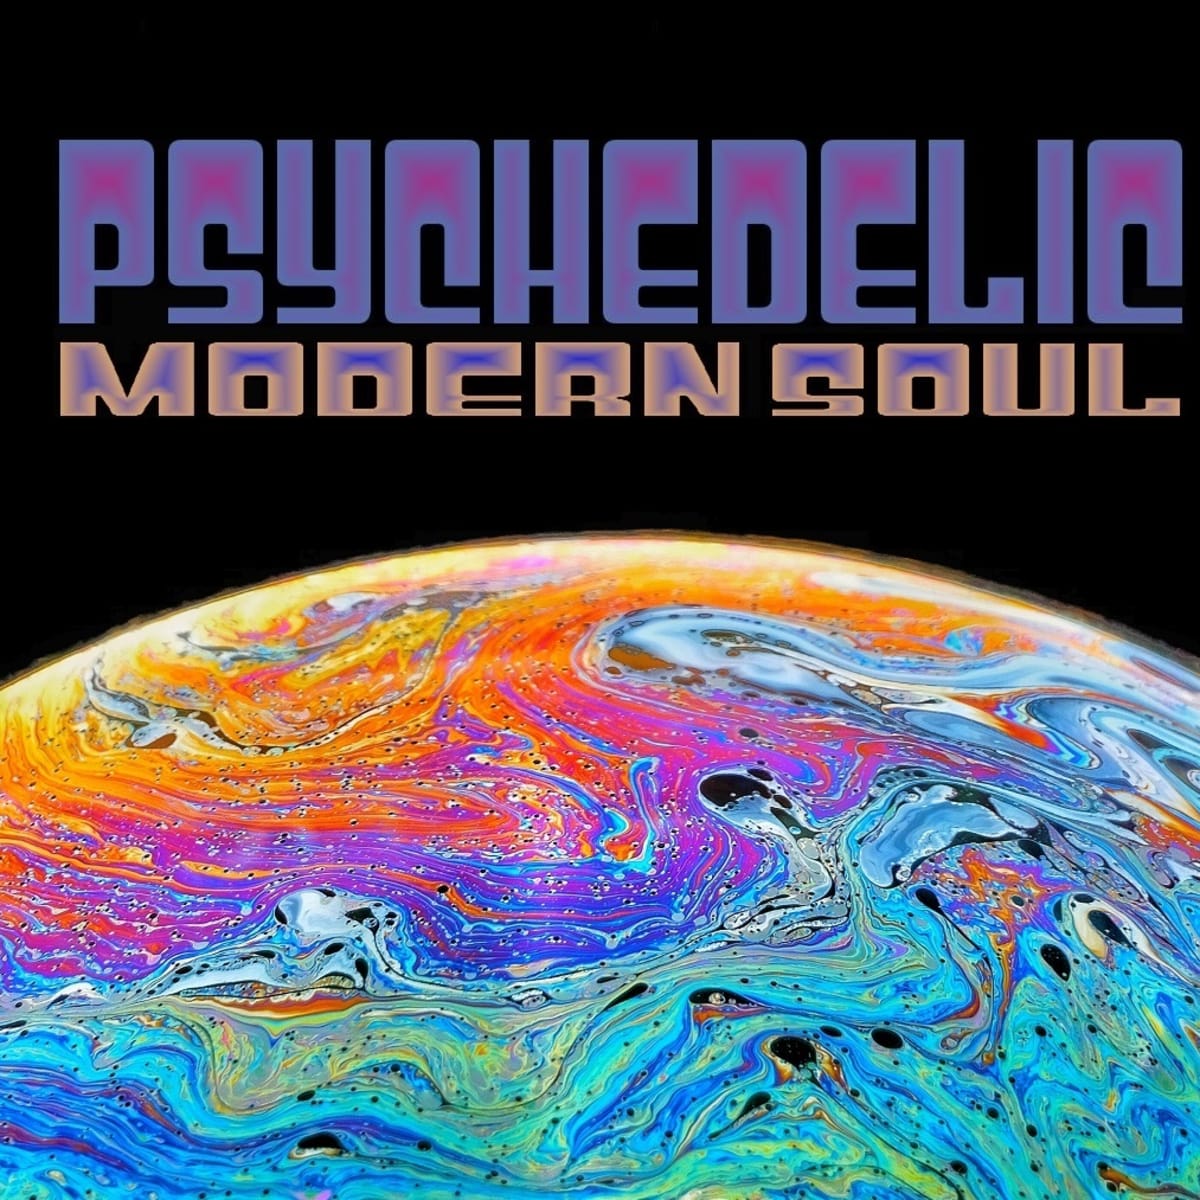 Psychedelic Soul